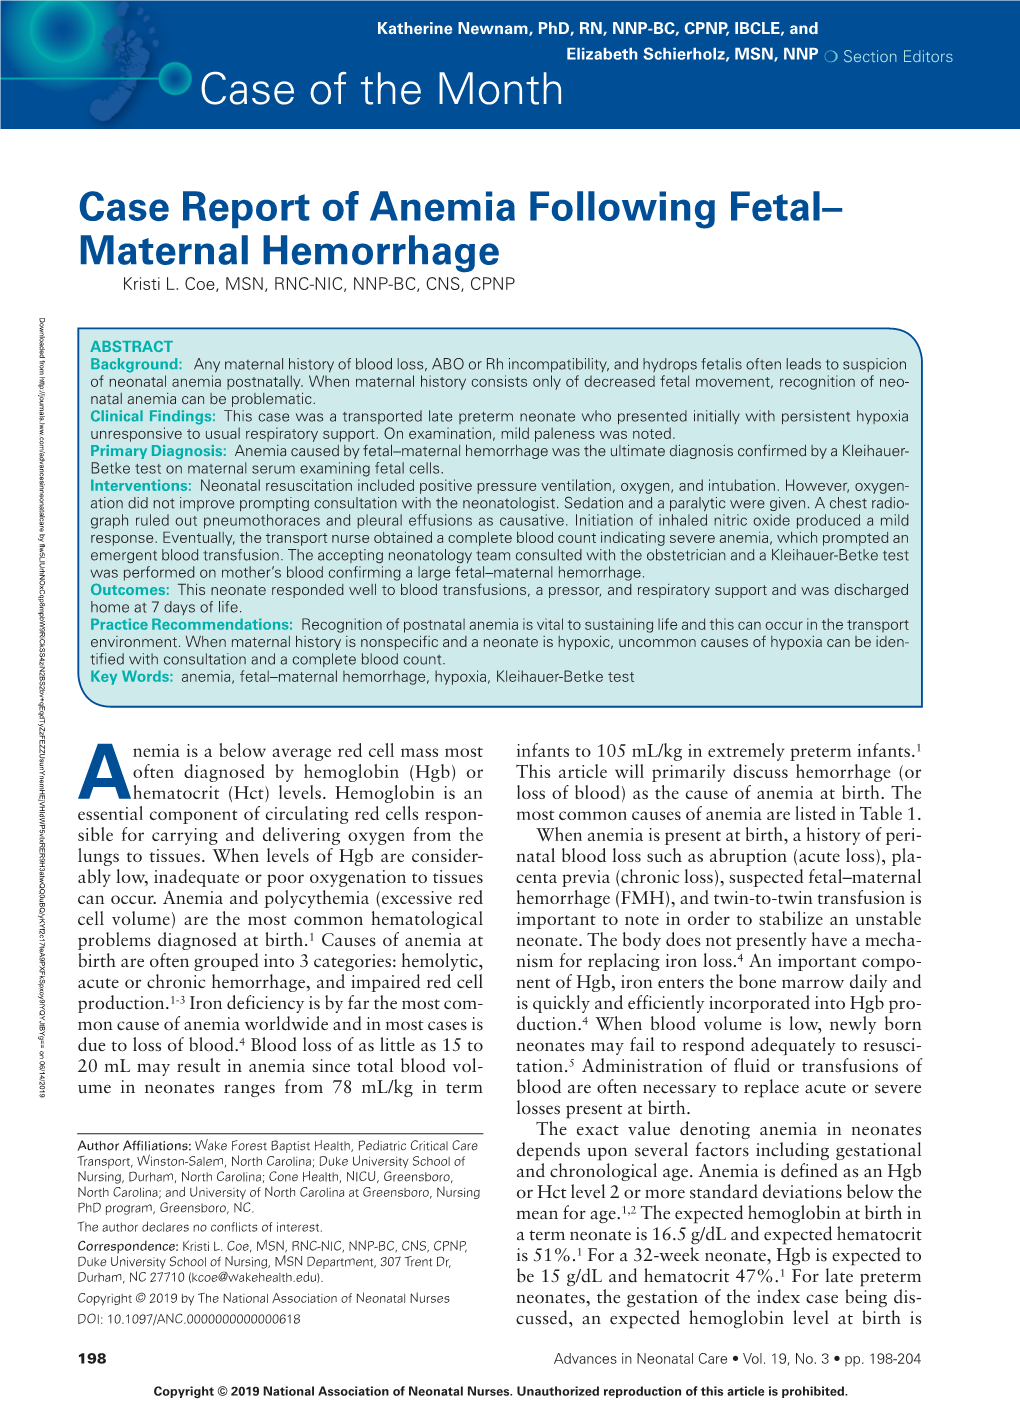 Case Report of Anemia Following Fetal-Maternal Hemorrhage